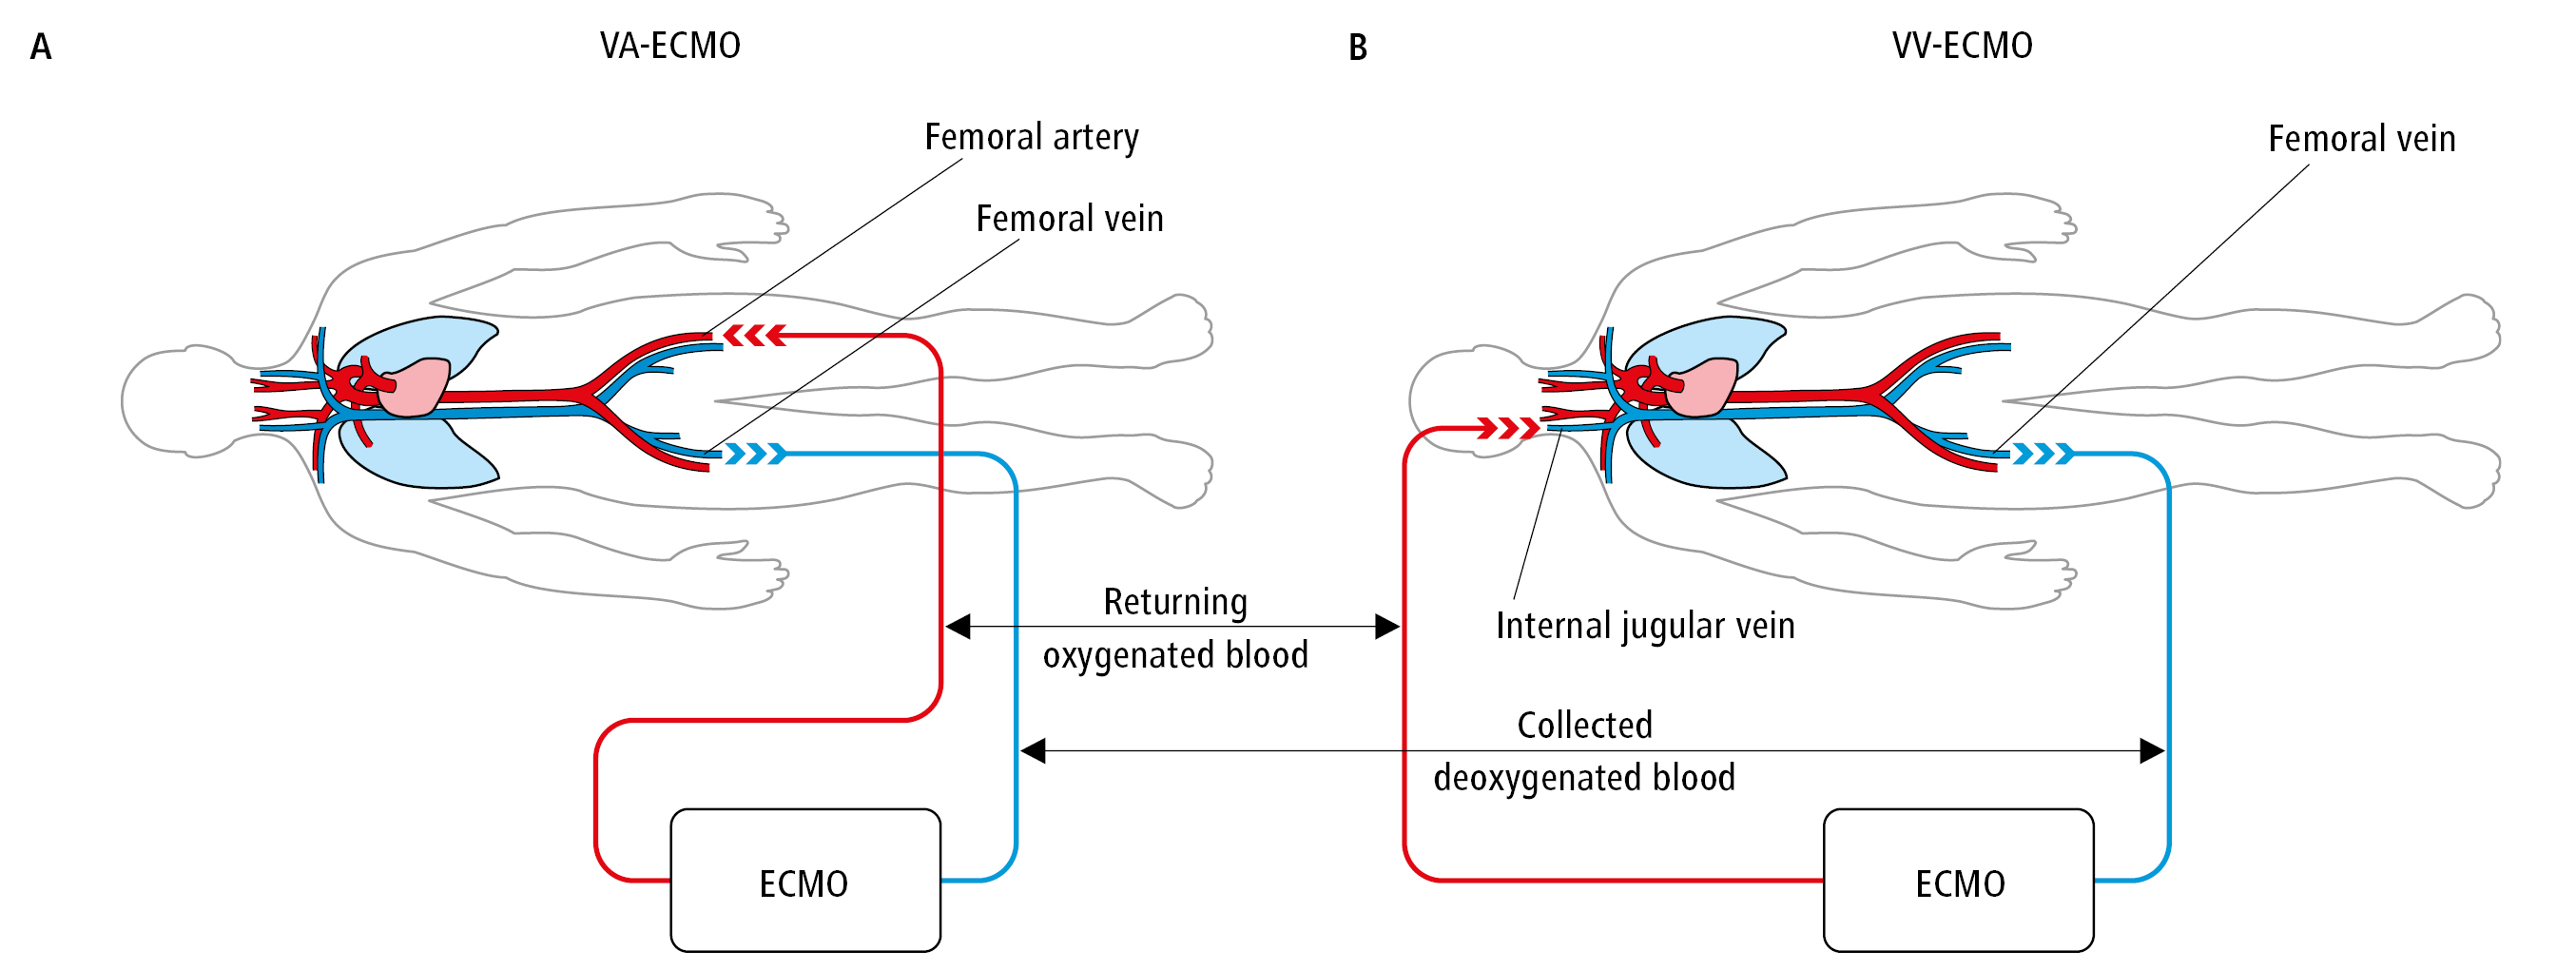 Figure 031_0640.  
Scheme of extracorporeal membrane oxygenation (ECMO).  A , venoarterial system (VA-ECMO).  B , venovenous system (VV-ECMO). 